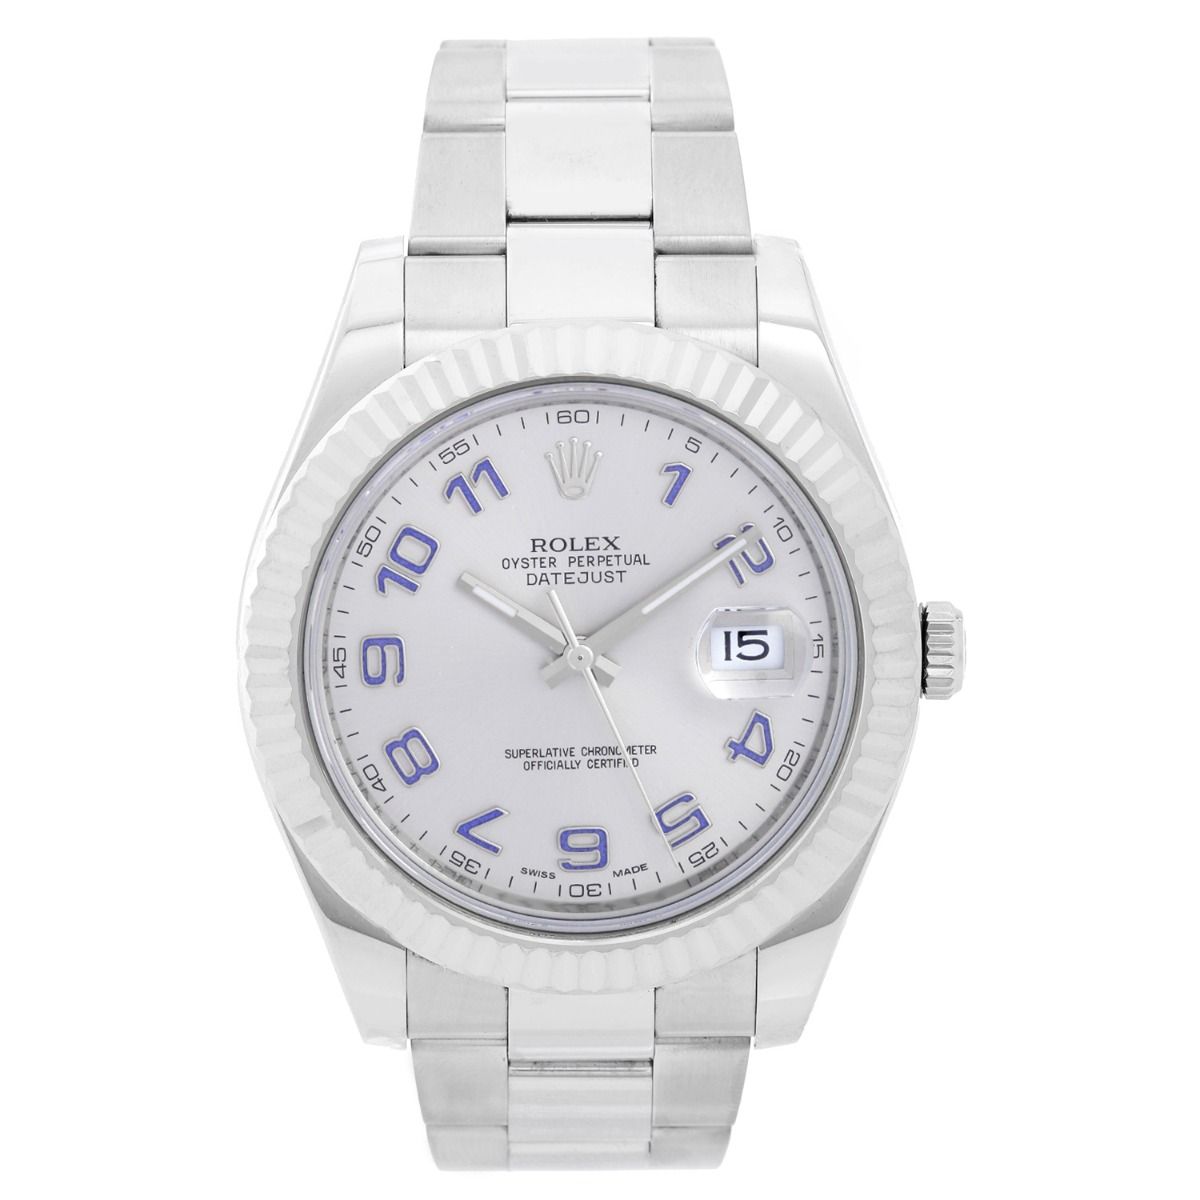 tørst Botanik at styre Rolex Datejust II 41mm Watch Silver/Blue Arabic Dial 116334